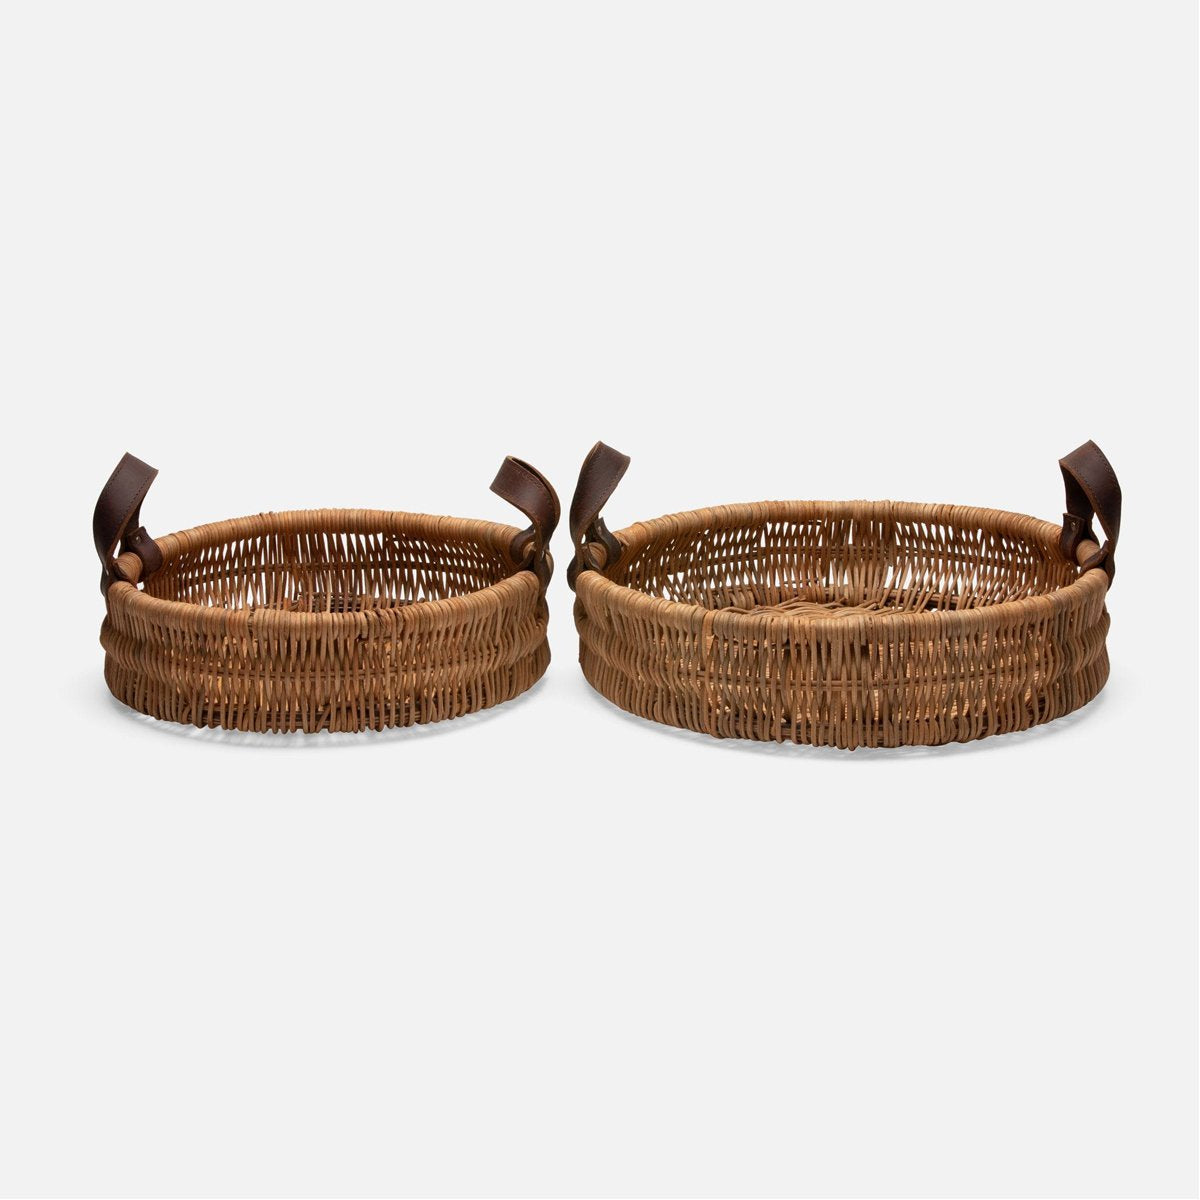 Pigeon and Poodle Yakima Round Baskets, 2-Piece Set